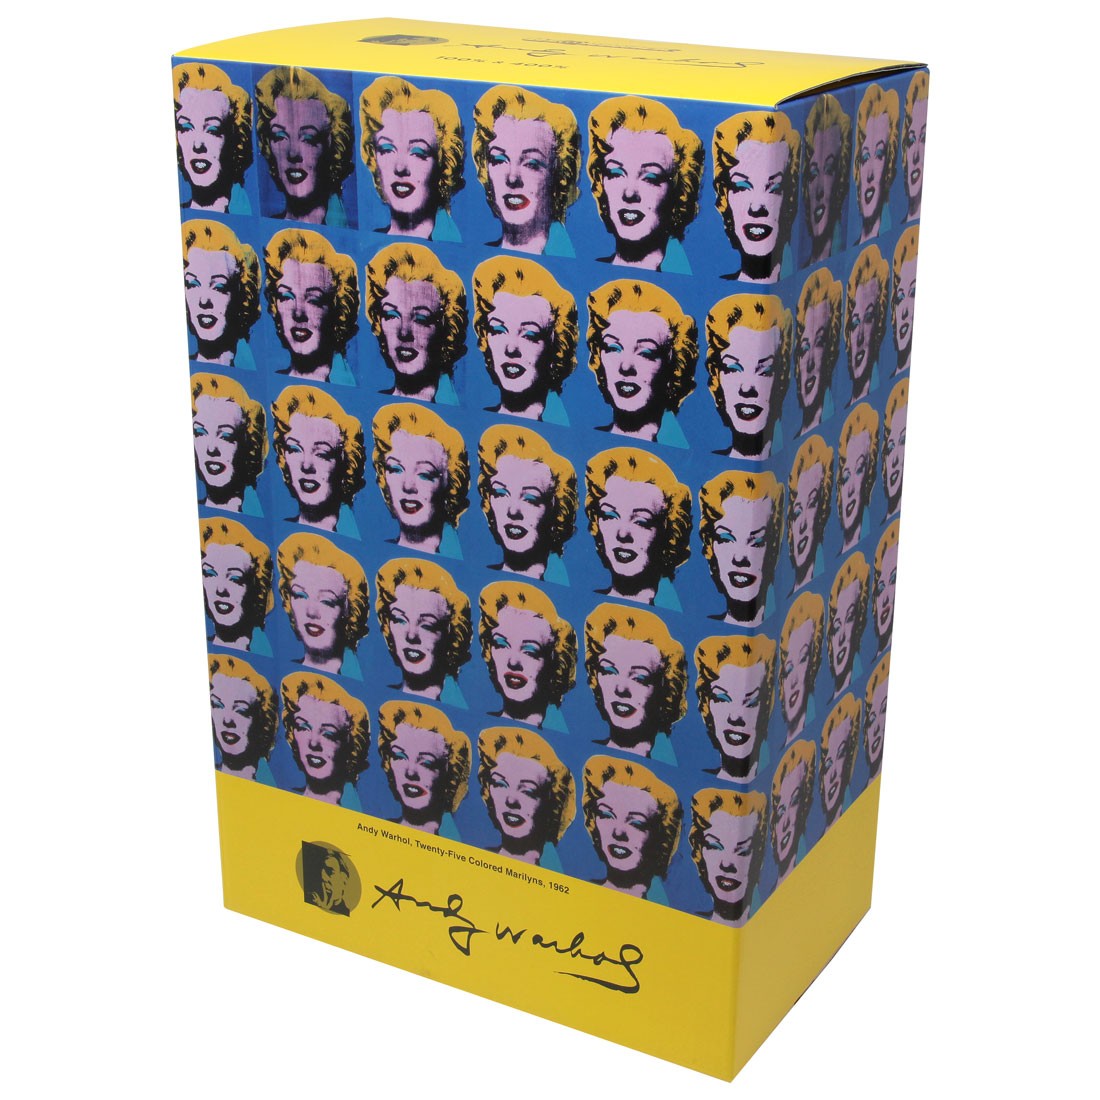 Medicom Andy Warhol Marilyn Monroe 100% 400% Bearbrick Figure Set (blue)